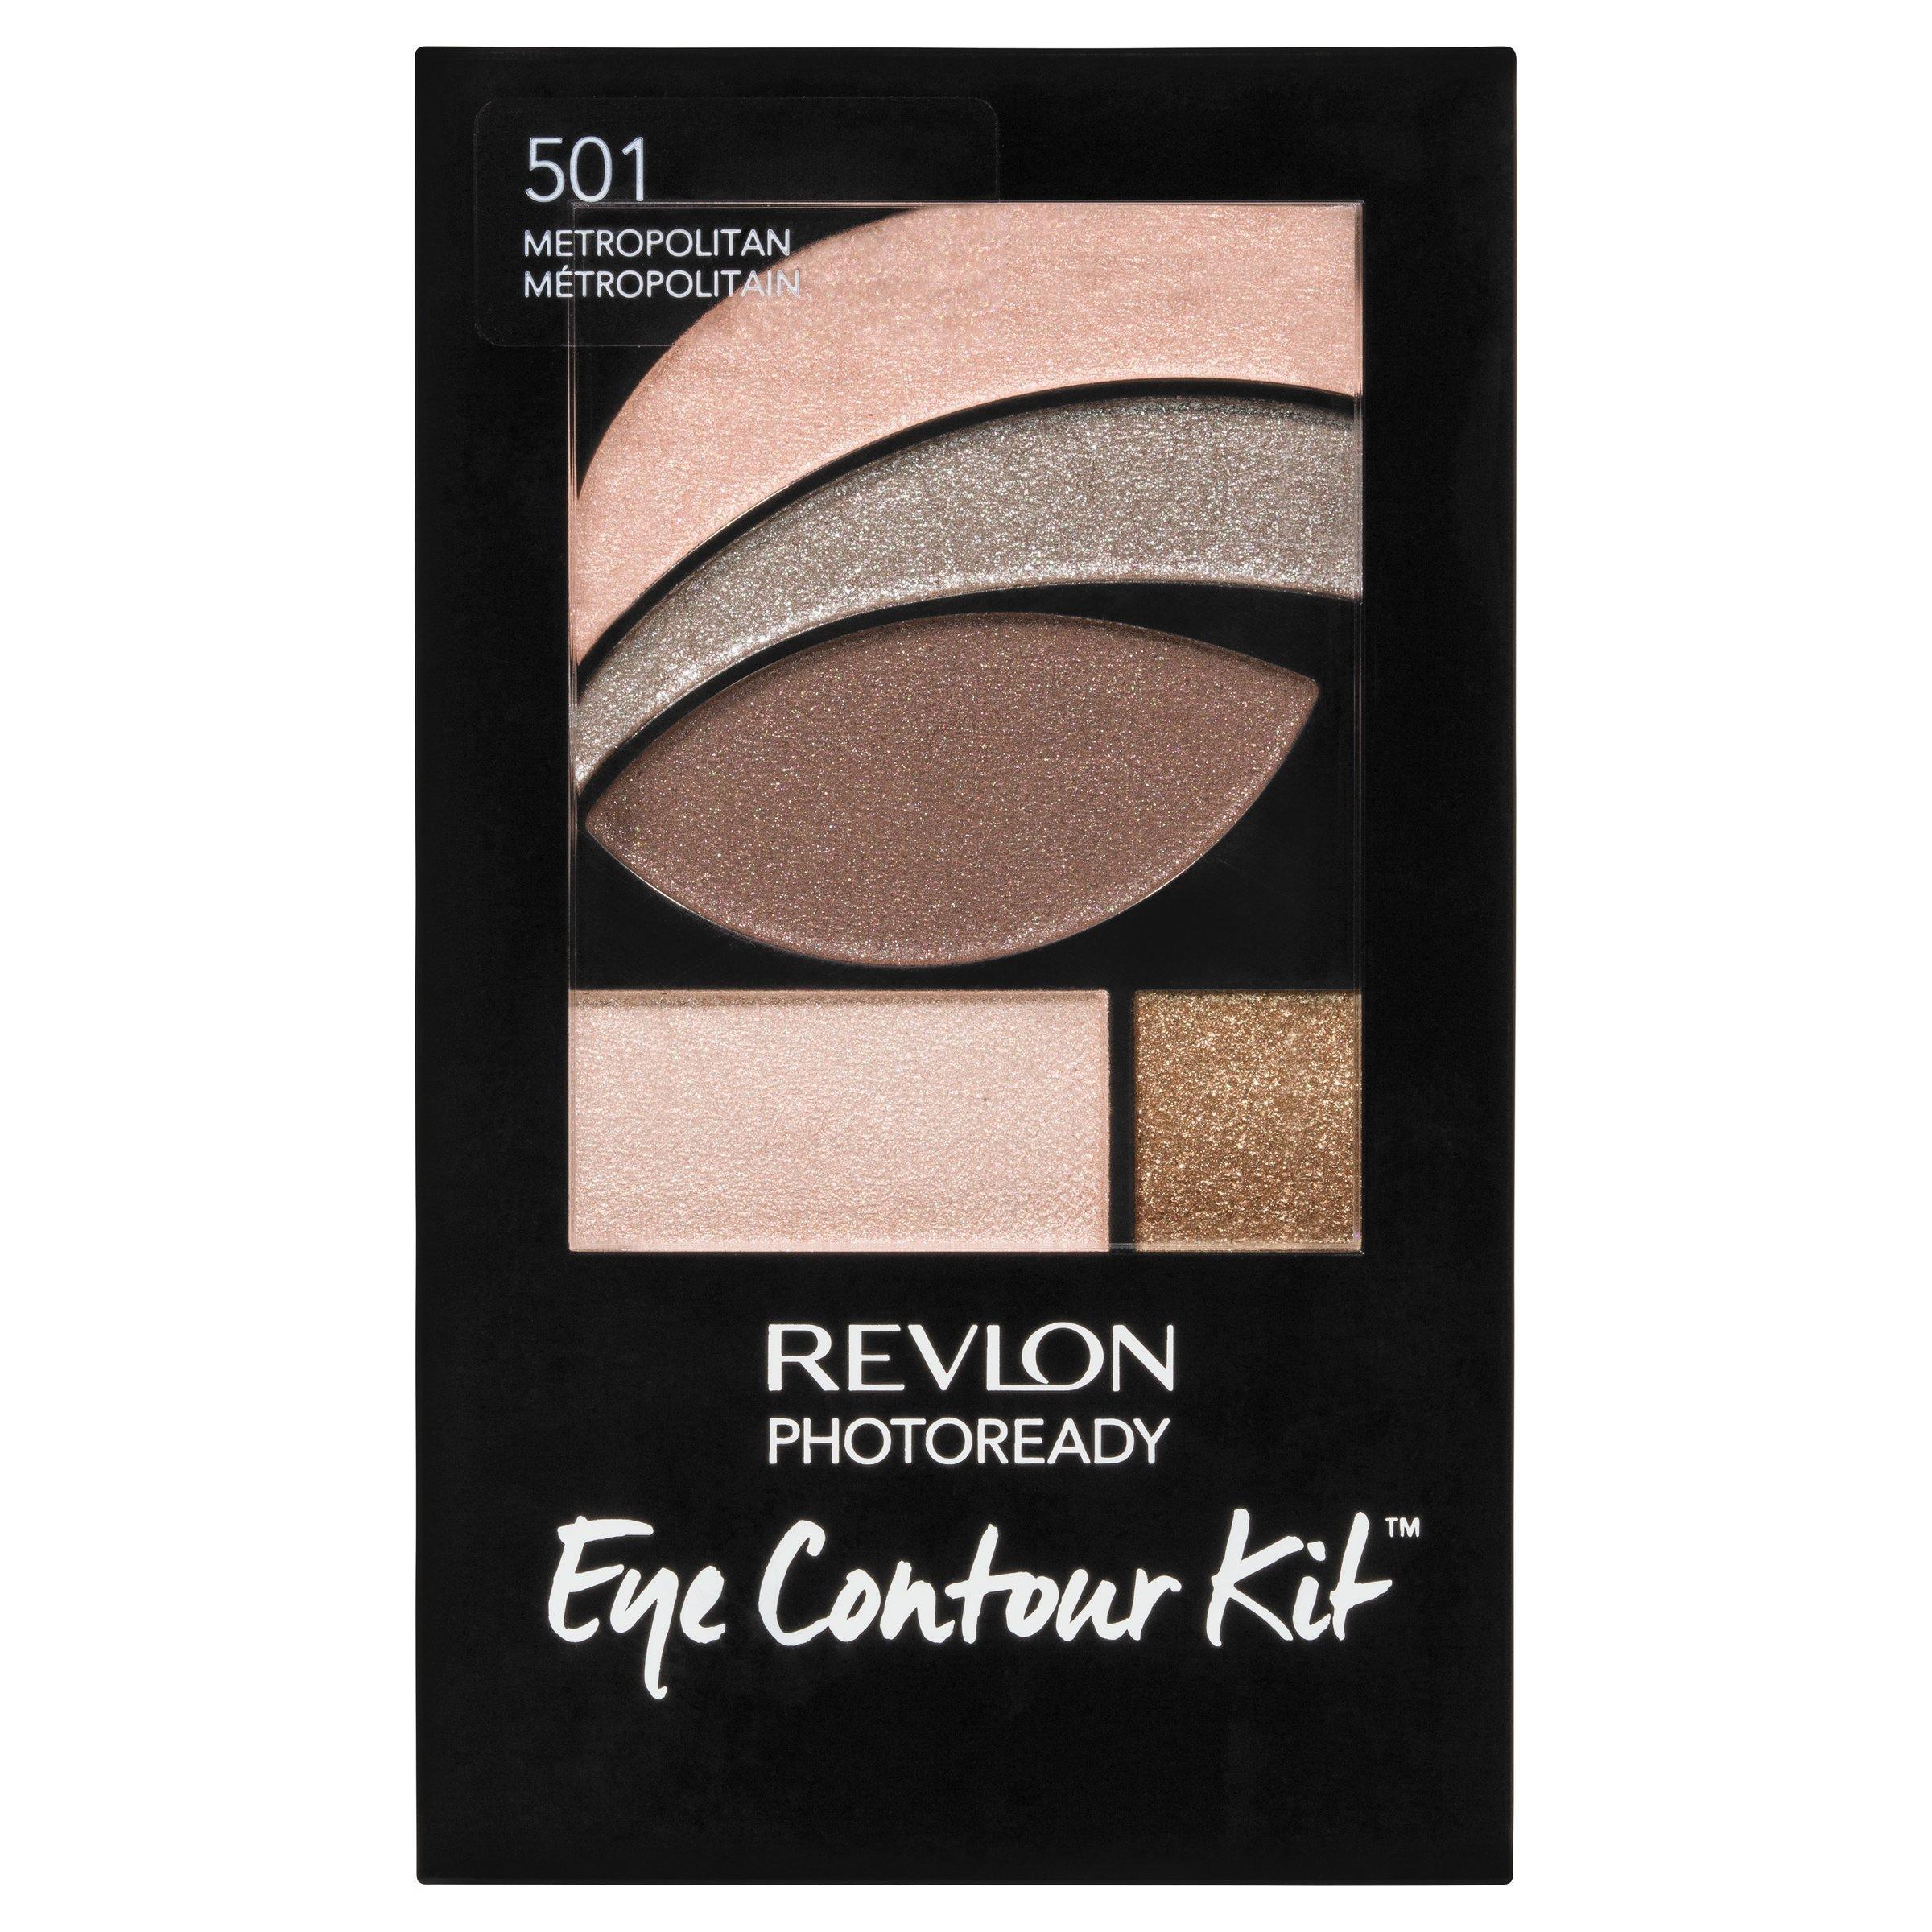 Revlon PhotoReady Eye Contour Kit™ Metropolitan 501 (Carded) - www.indiancart.com.au - Eyeshadow - Revlon - Revlon